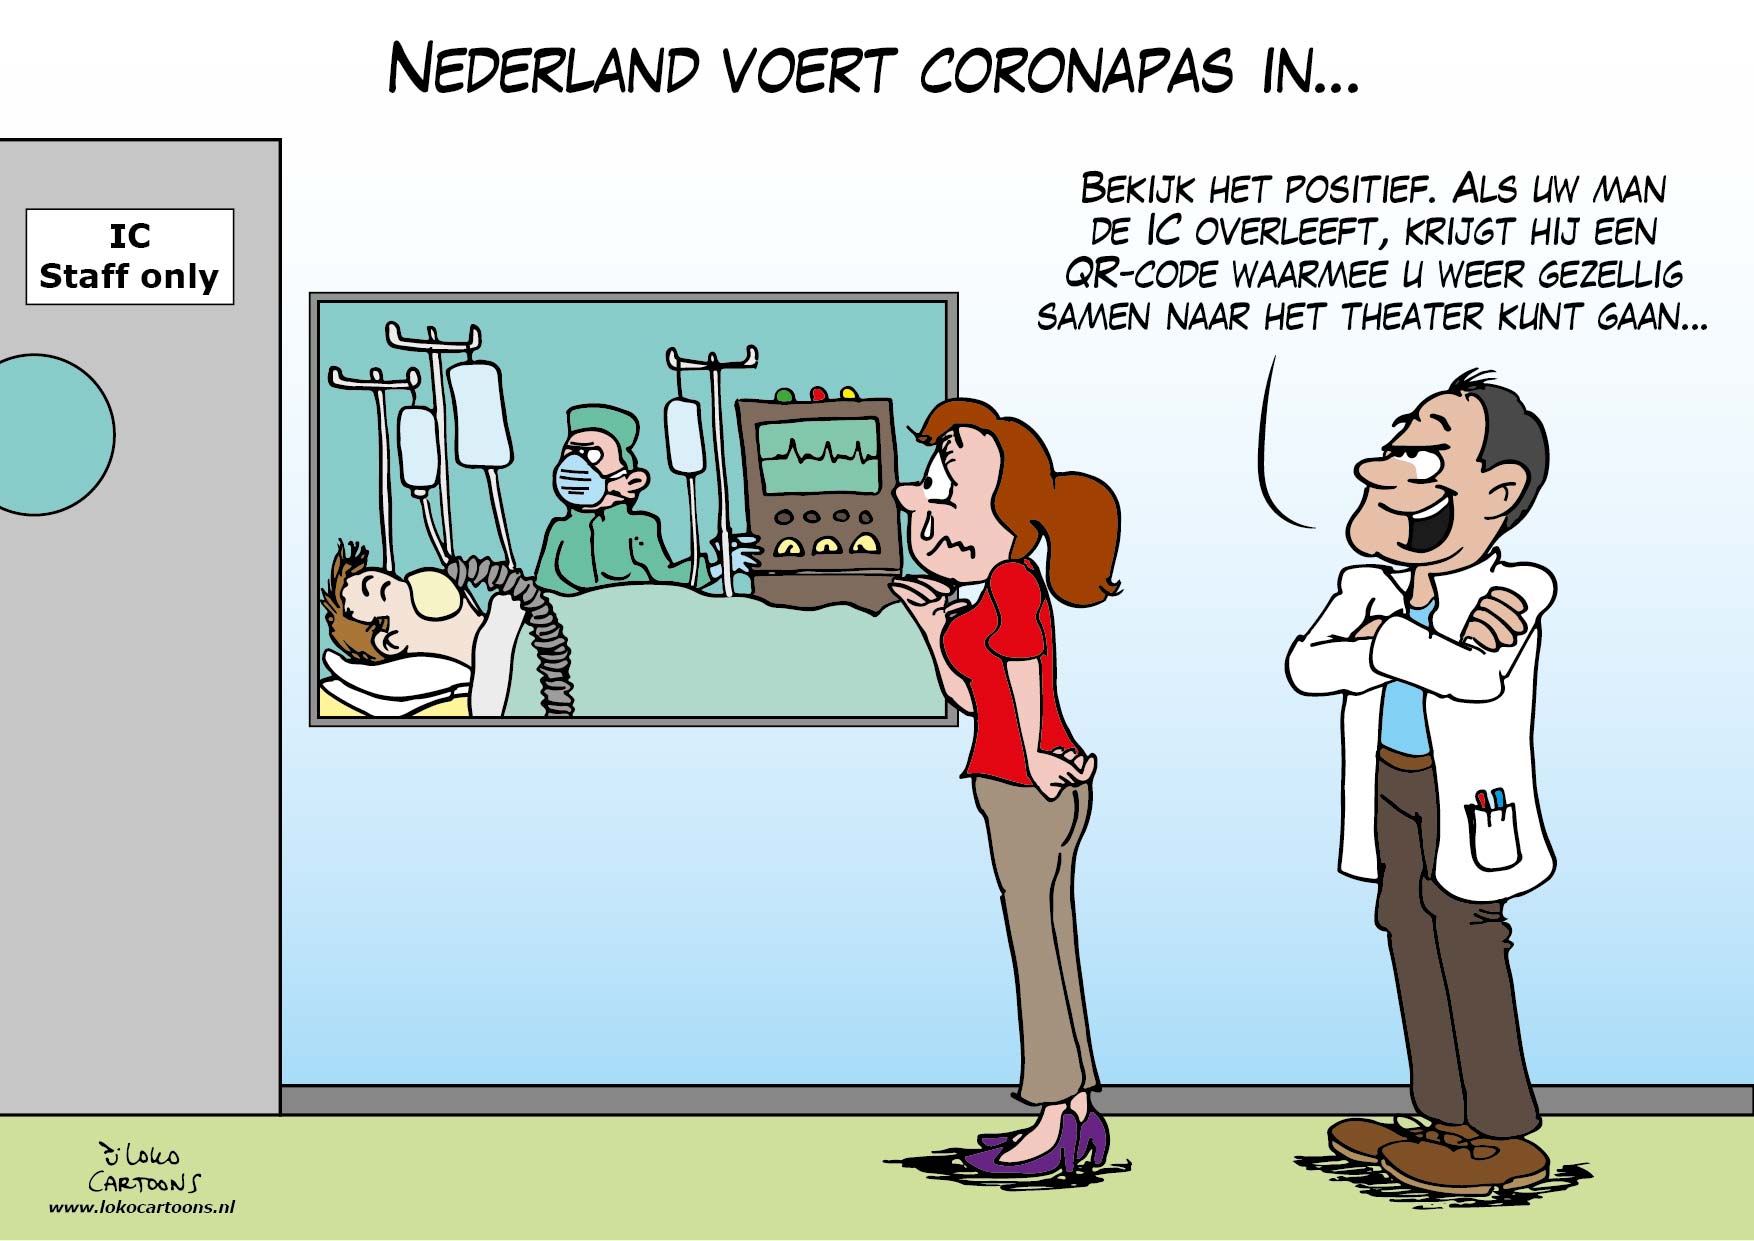 Nederland voert coronapas…